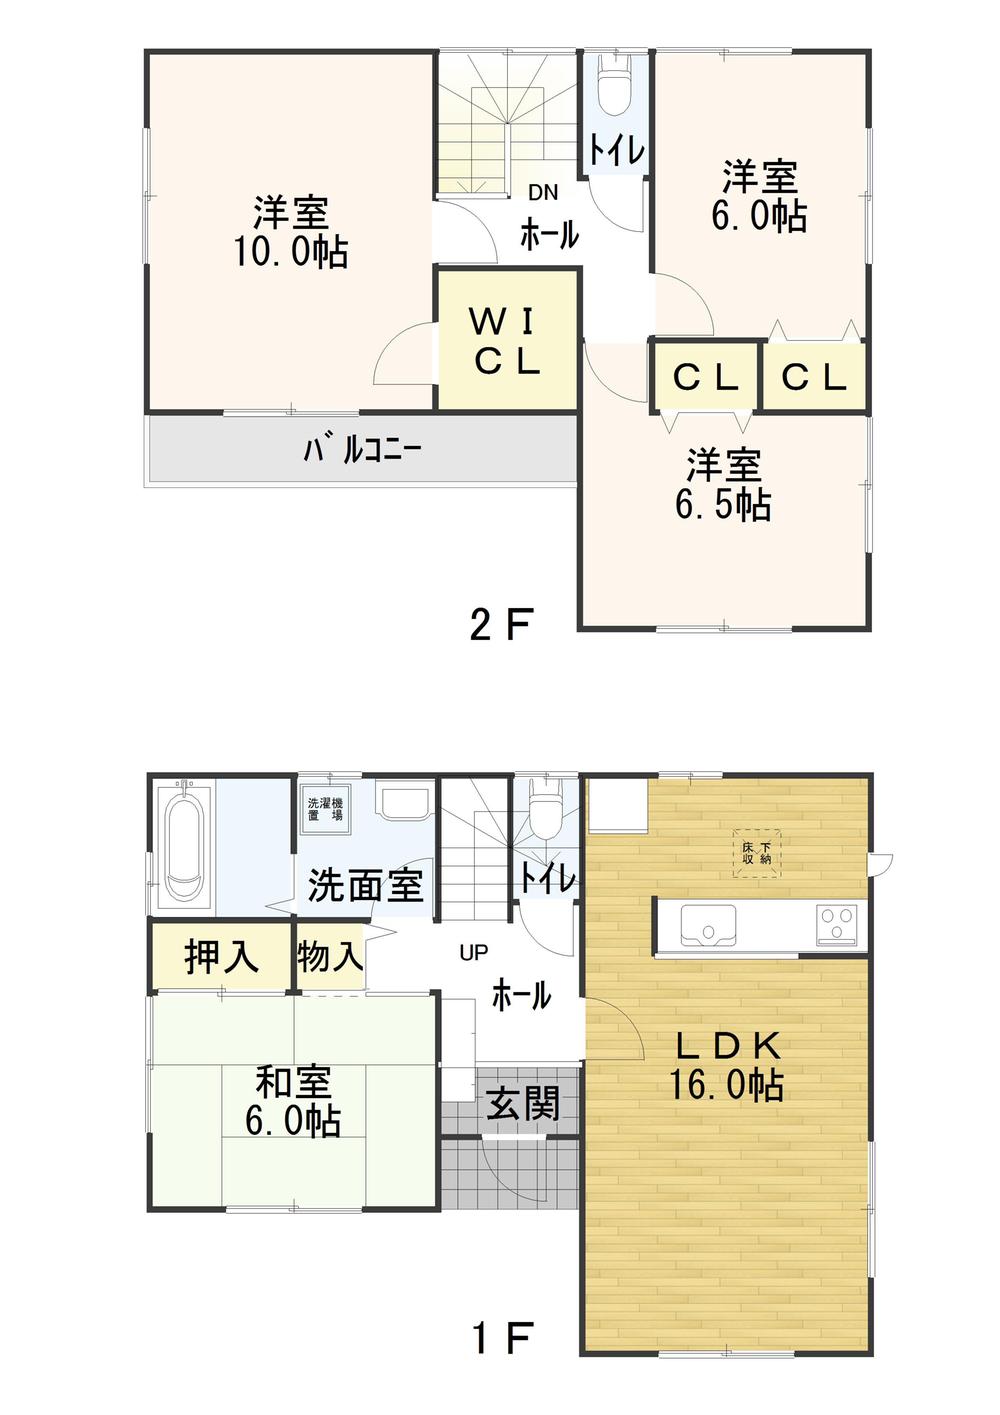 Floor plan. (4 Building), Price 16.8 million yen, 4LDK, Land area 231.31 sq m , Building area 105.99 sq m